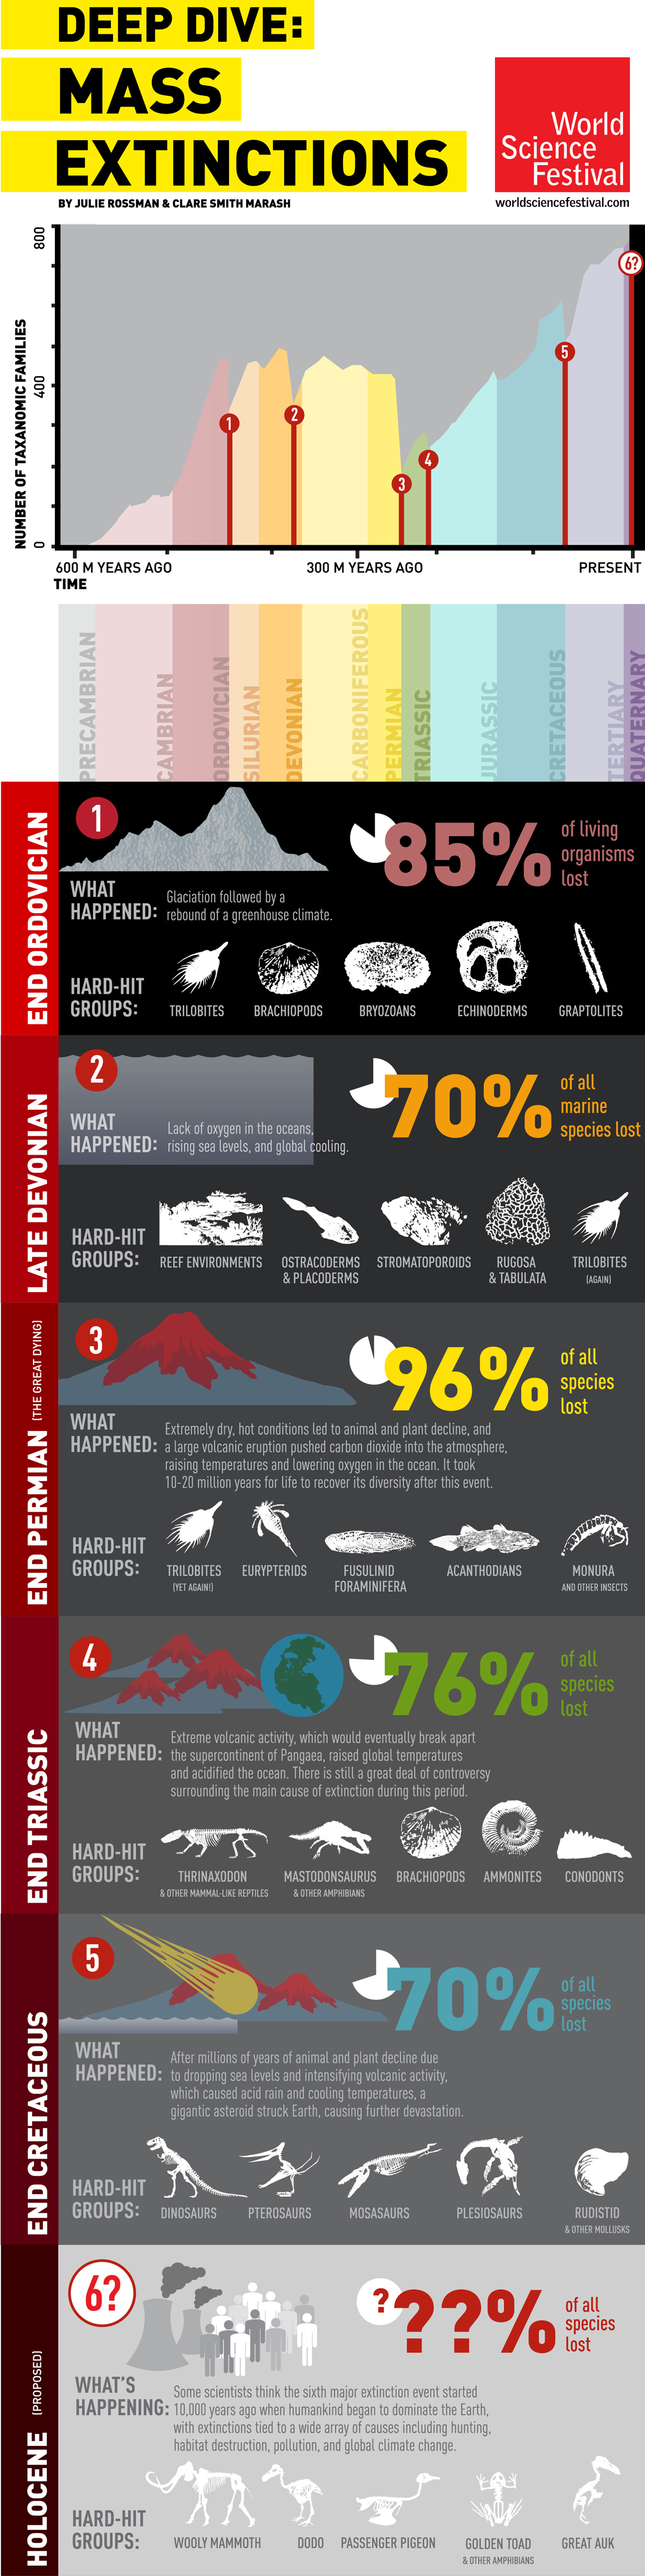 infographic-mass-extinctions